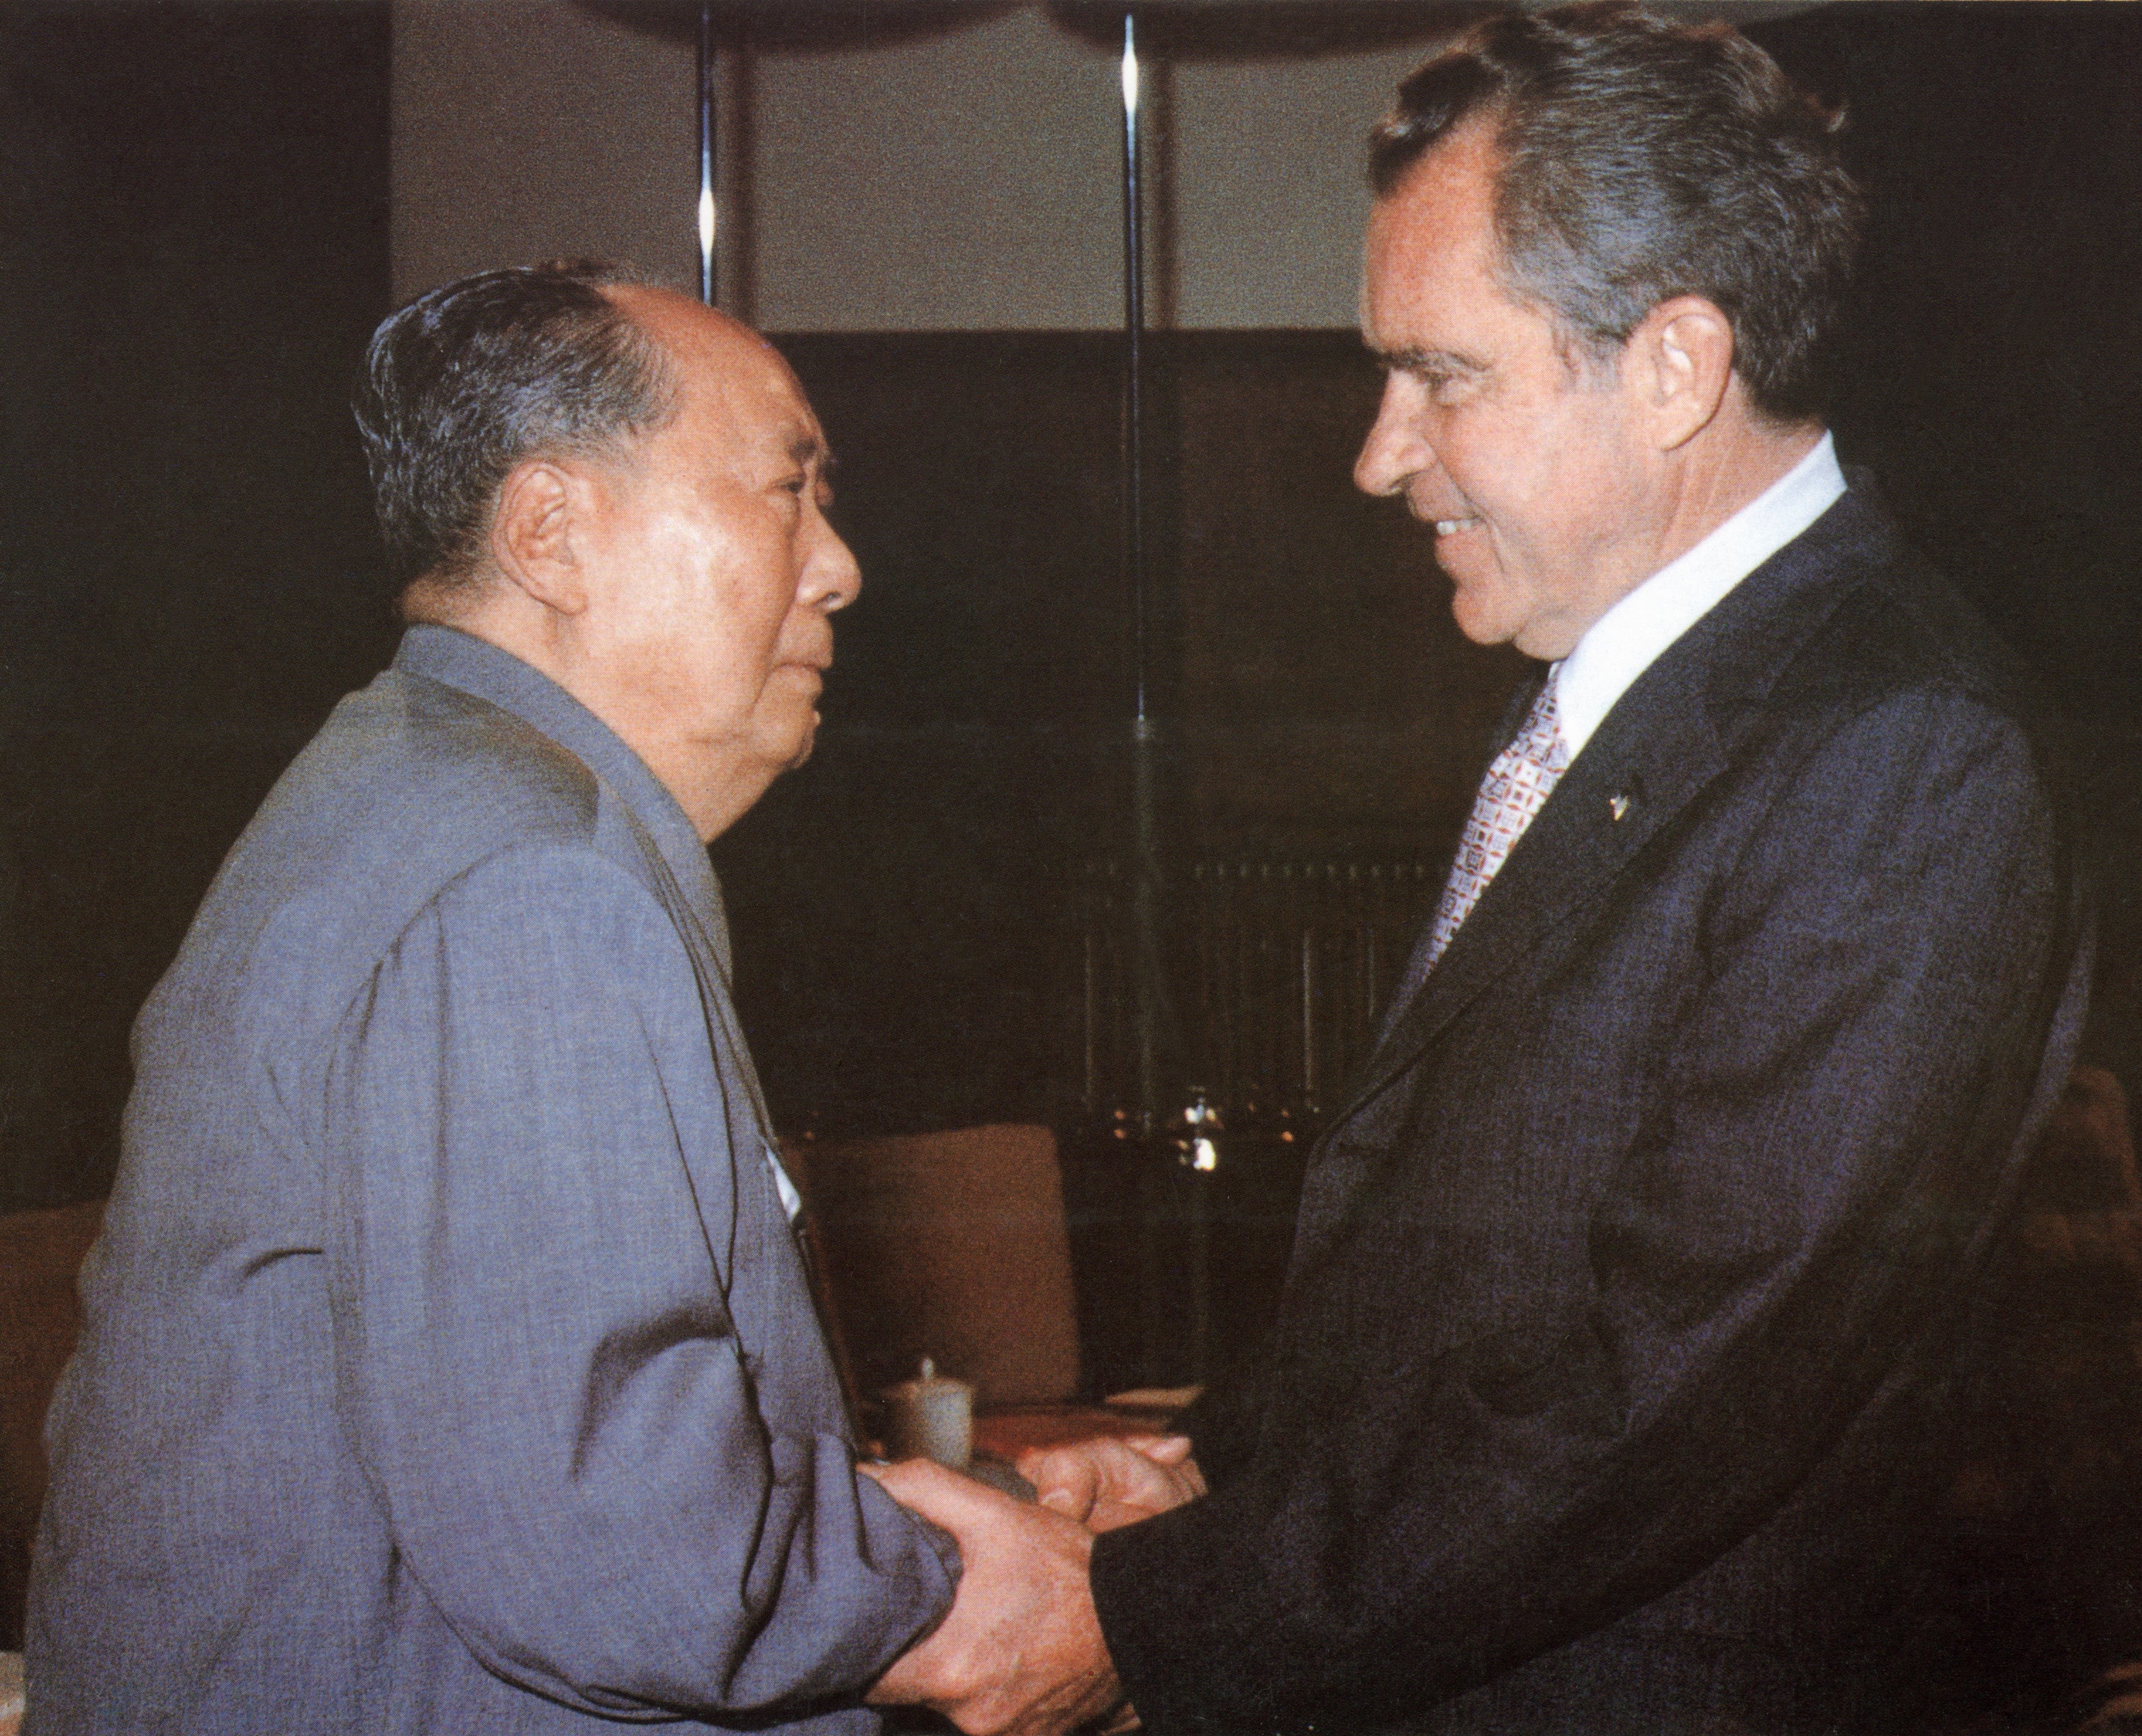 Chairman Mao (left) welcomes Richard Nixon to his house in Beijing in 1972